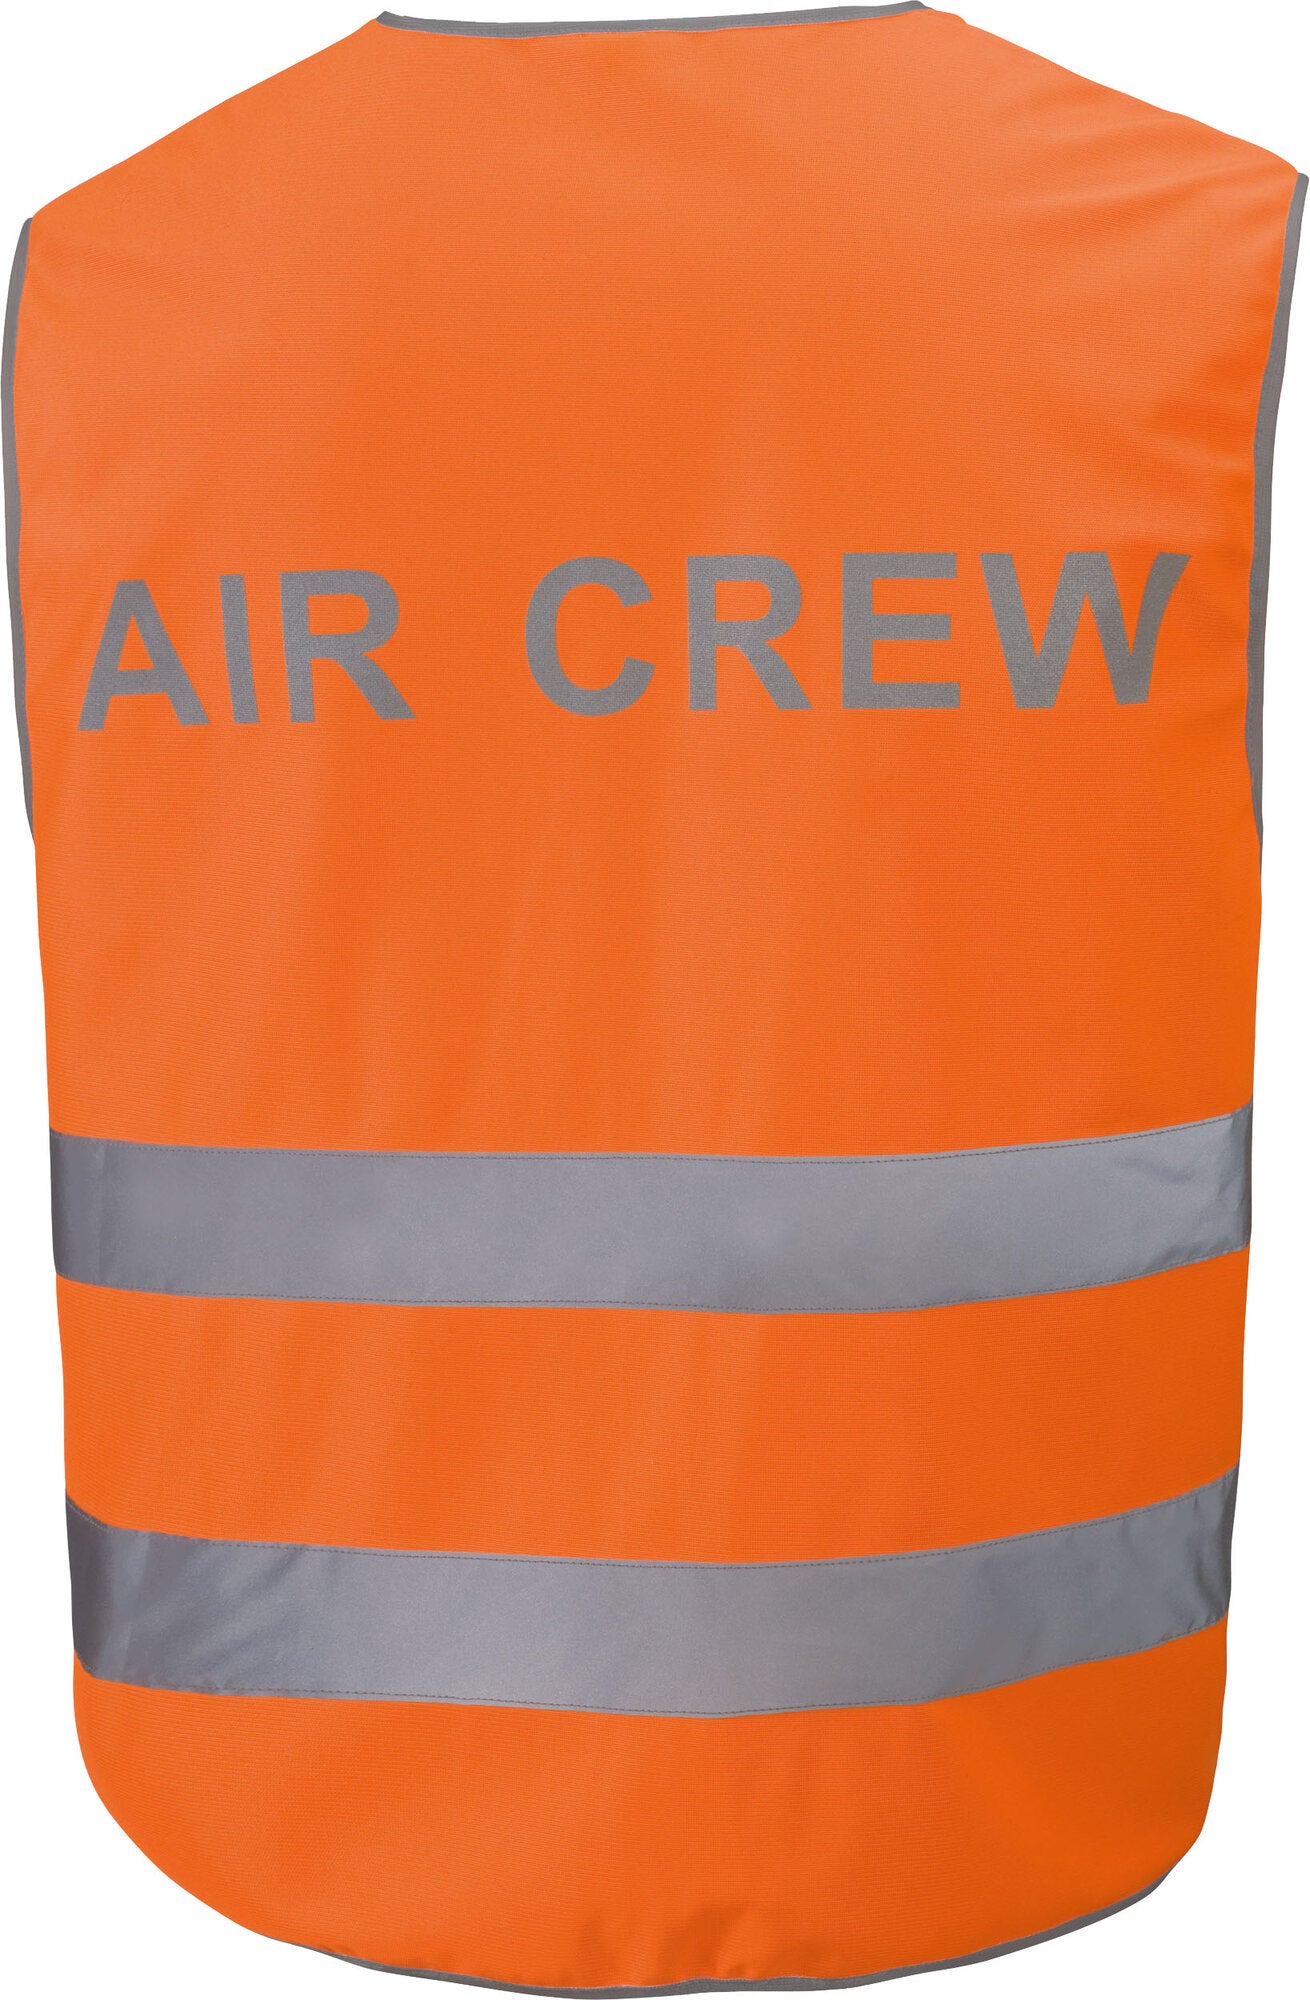 Airside Safety Vest by Design 4 Pilots